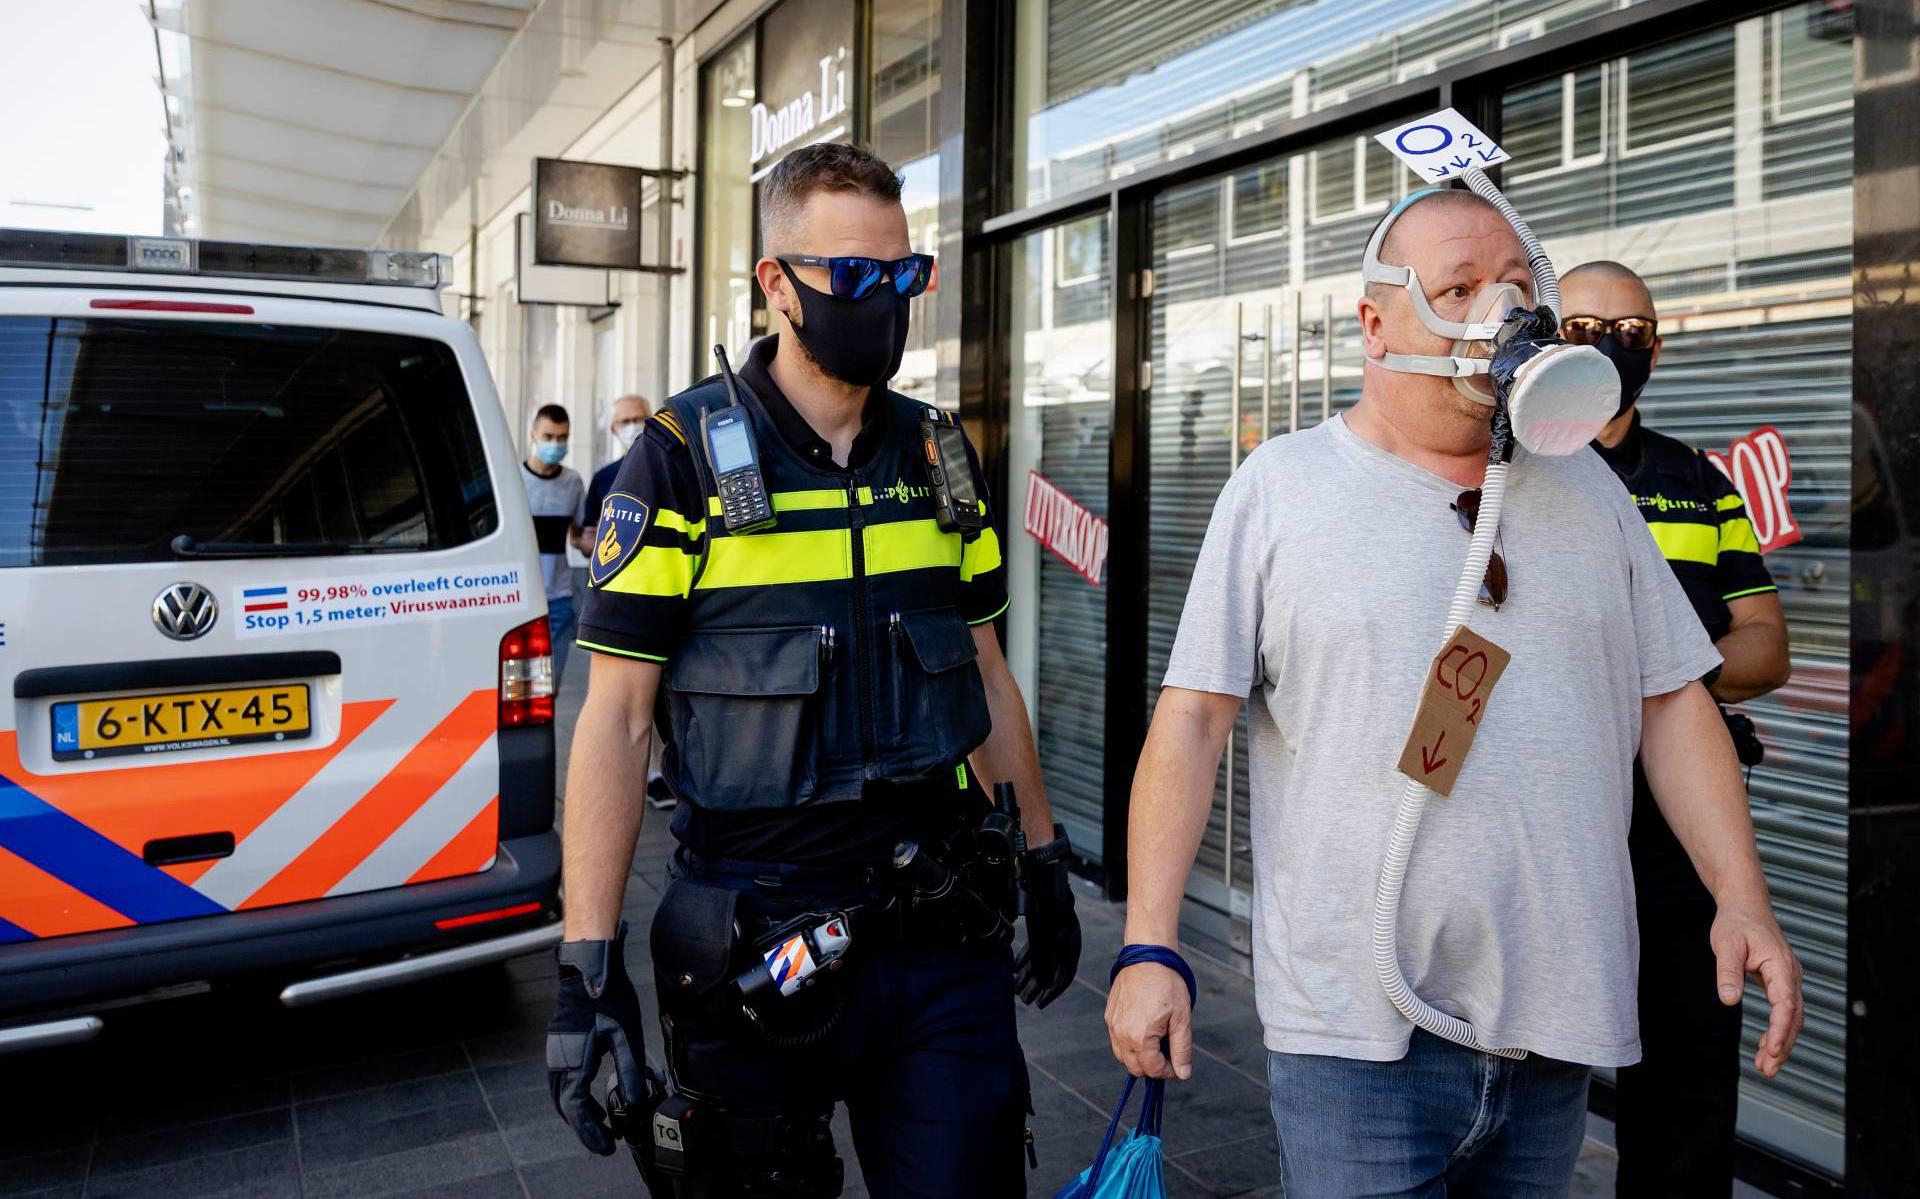 Betogers tegen mondkapjesplicht Rotterdam krijgen boete